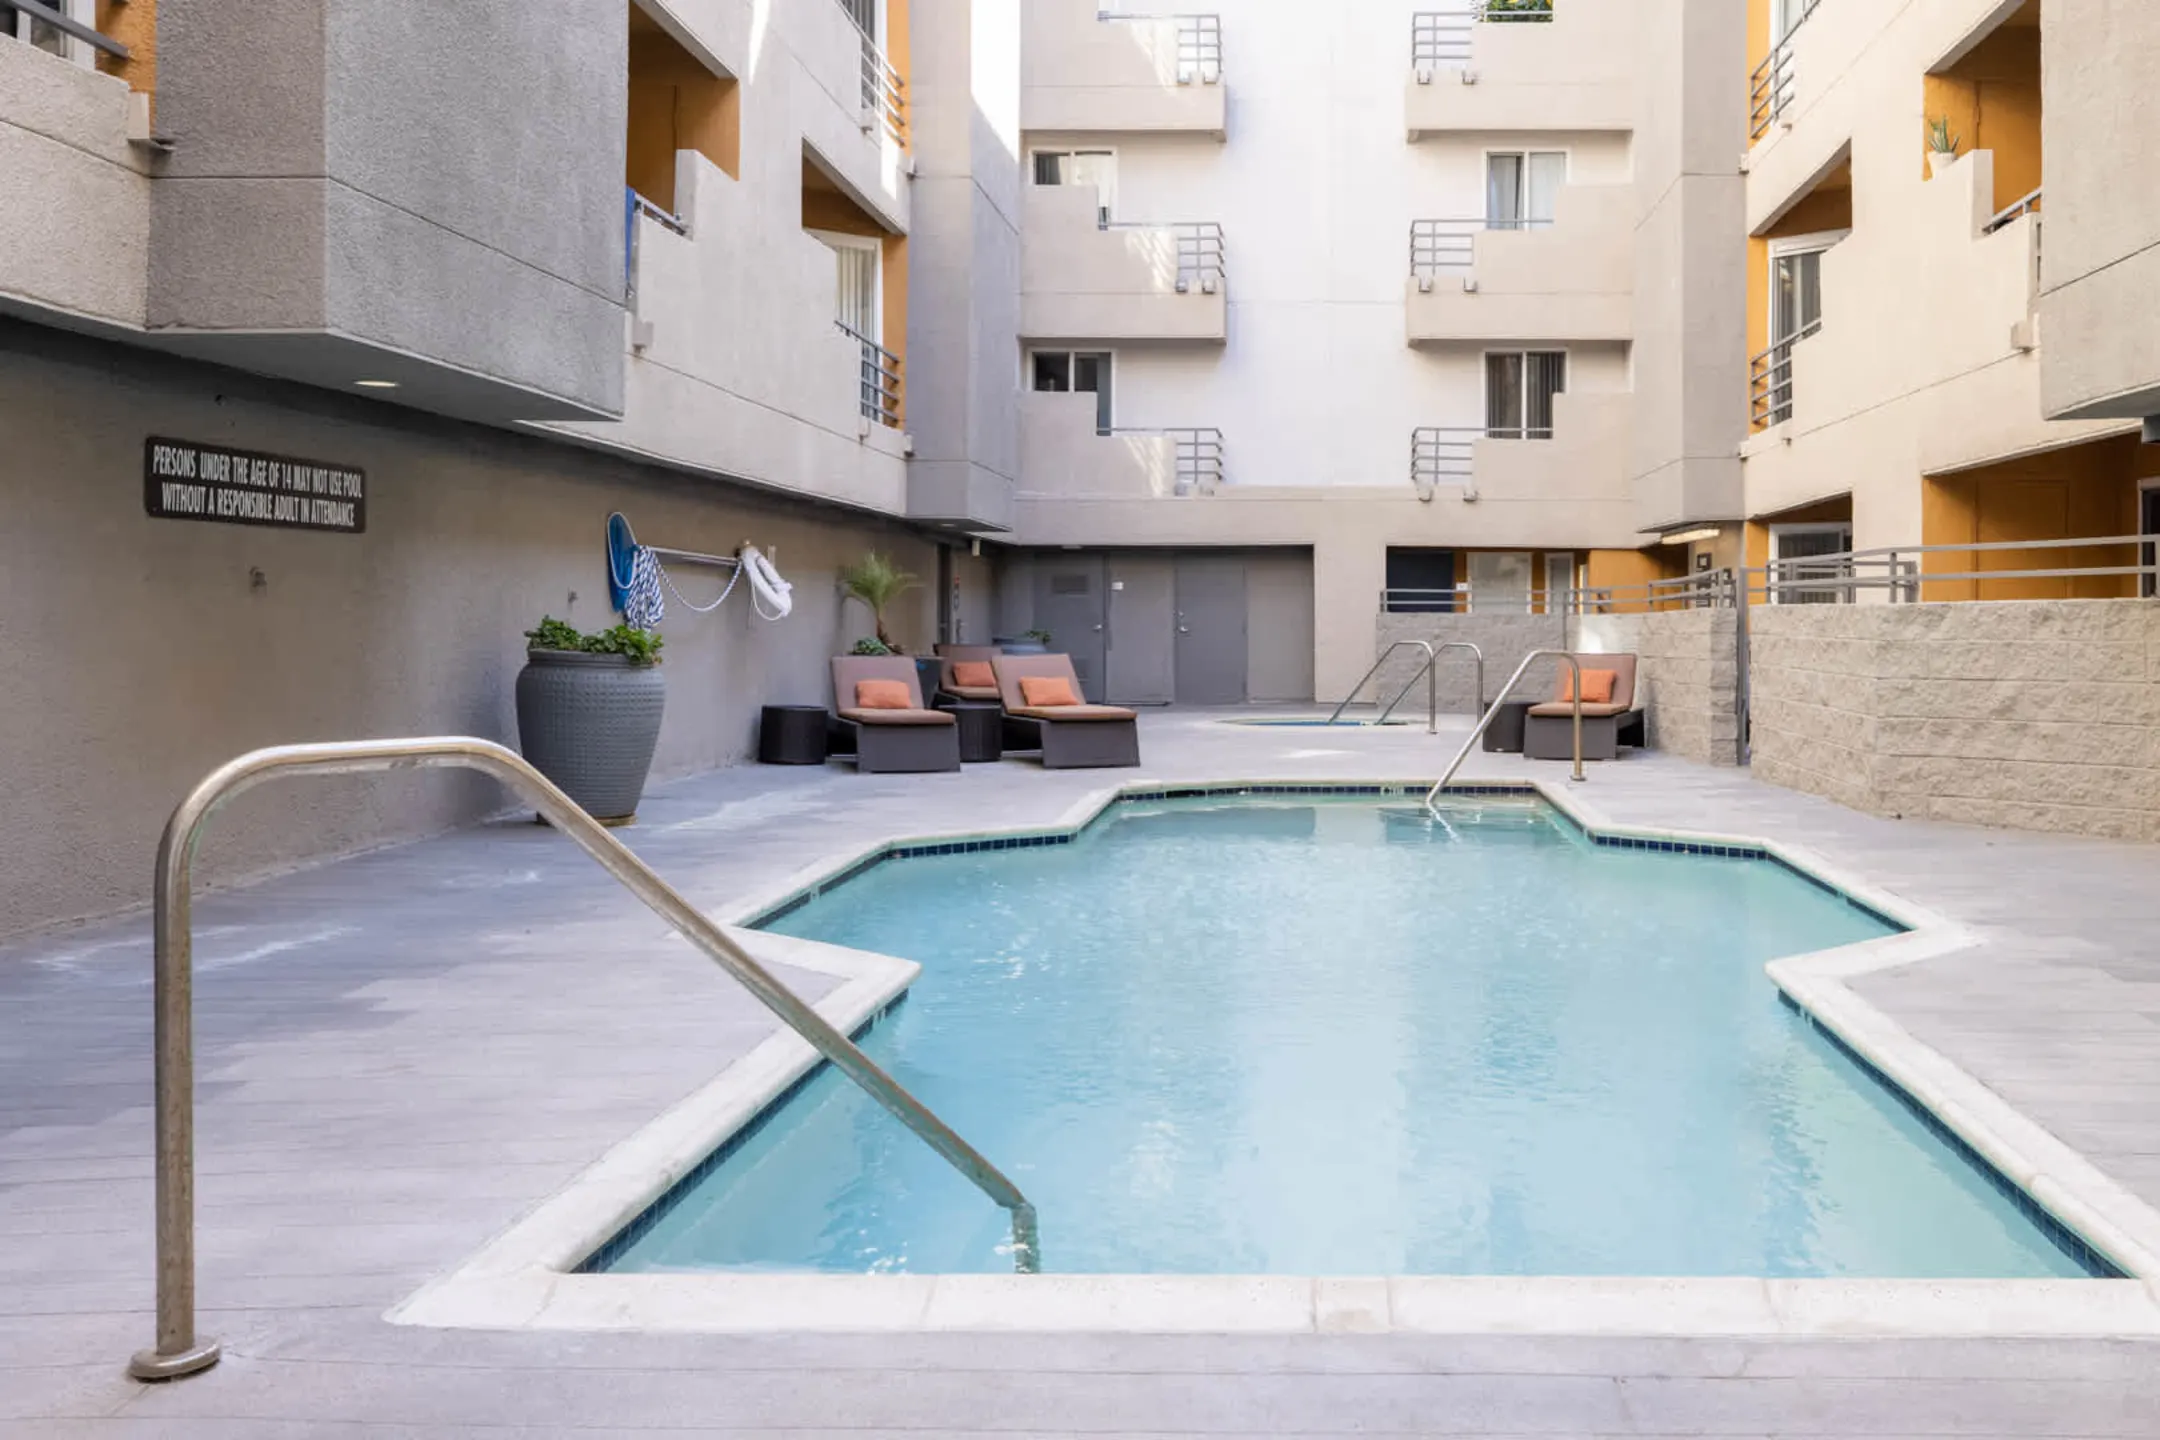 Pool - Vantage Hollywood Apartments - Los Angeles, CA